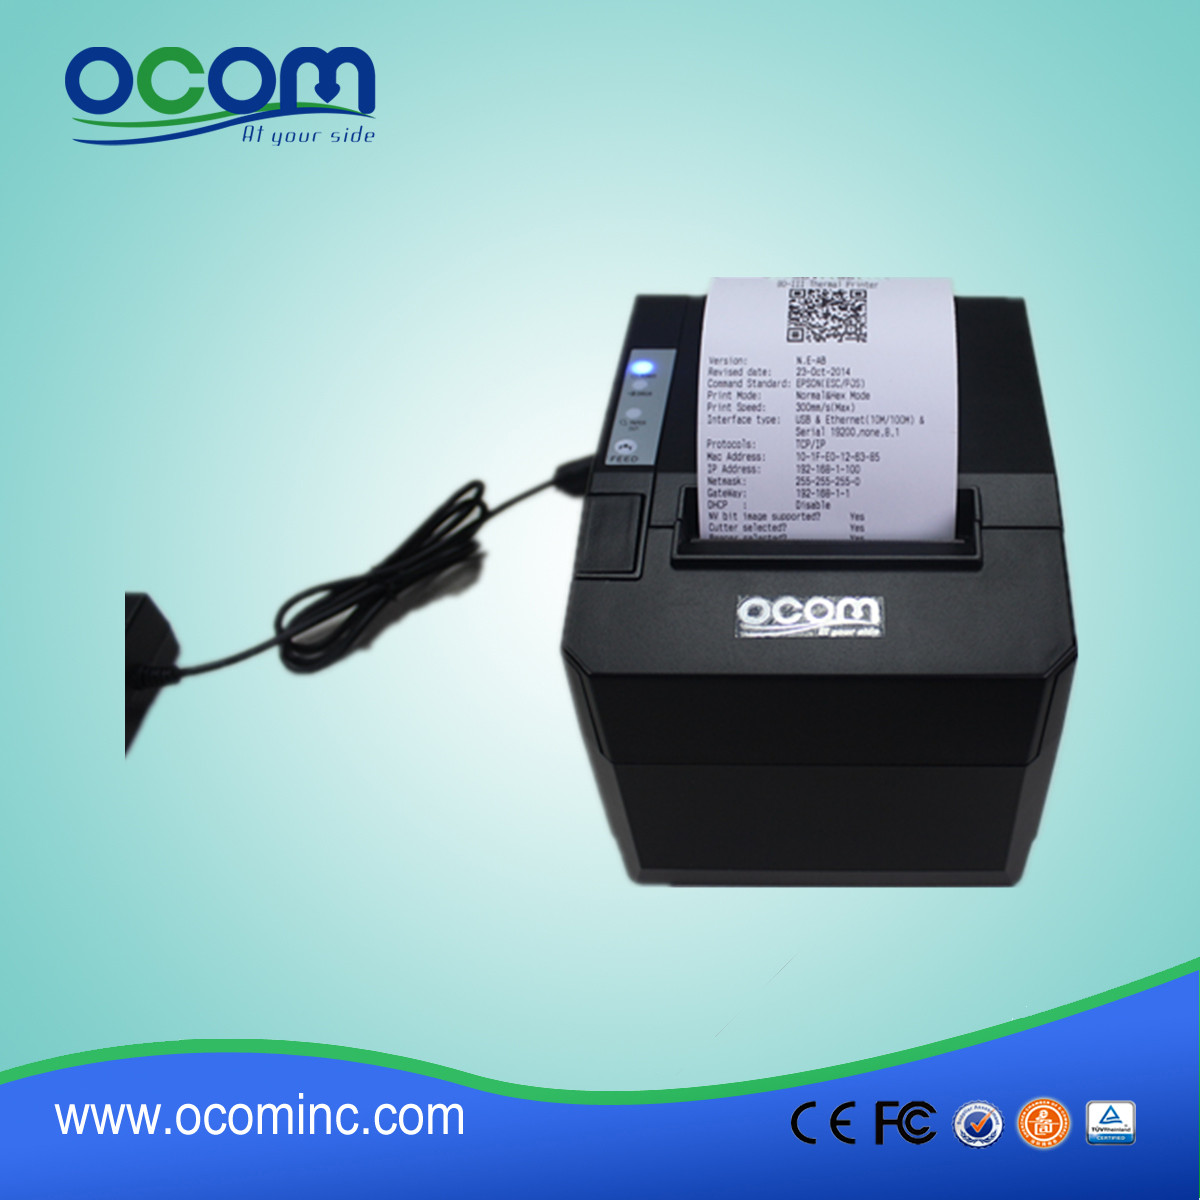 OCPP-88a 80 mm Thermal Restaurant Bill POS Printer mit Auto Cutter